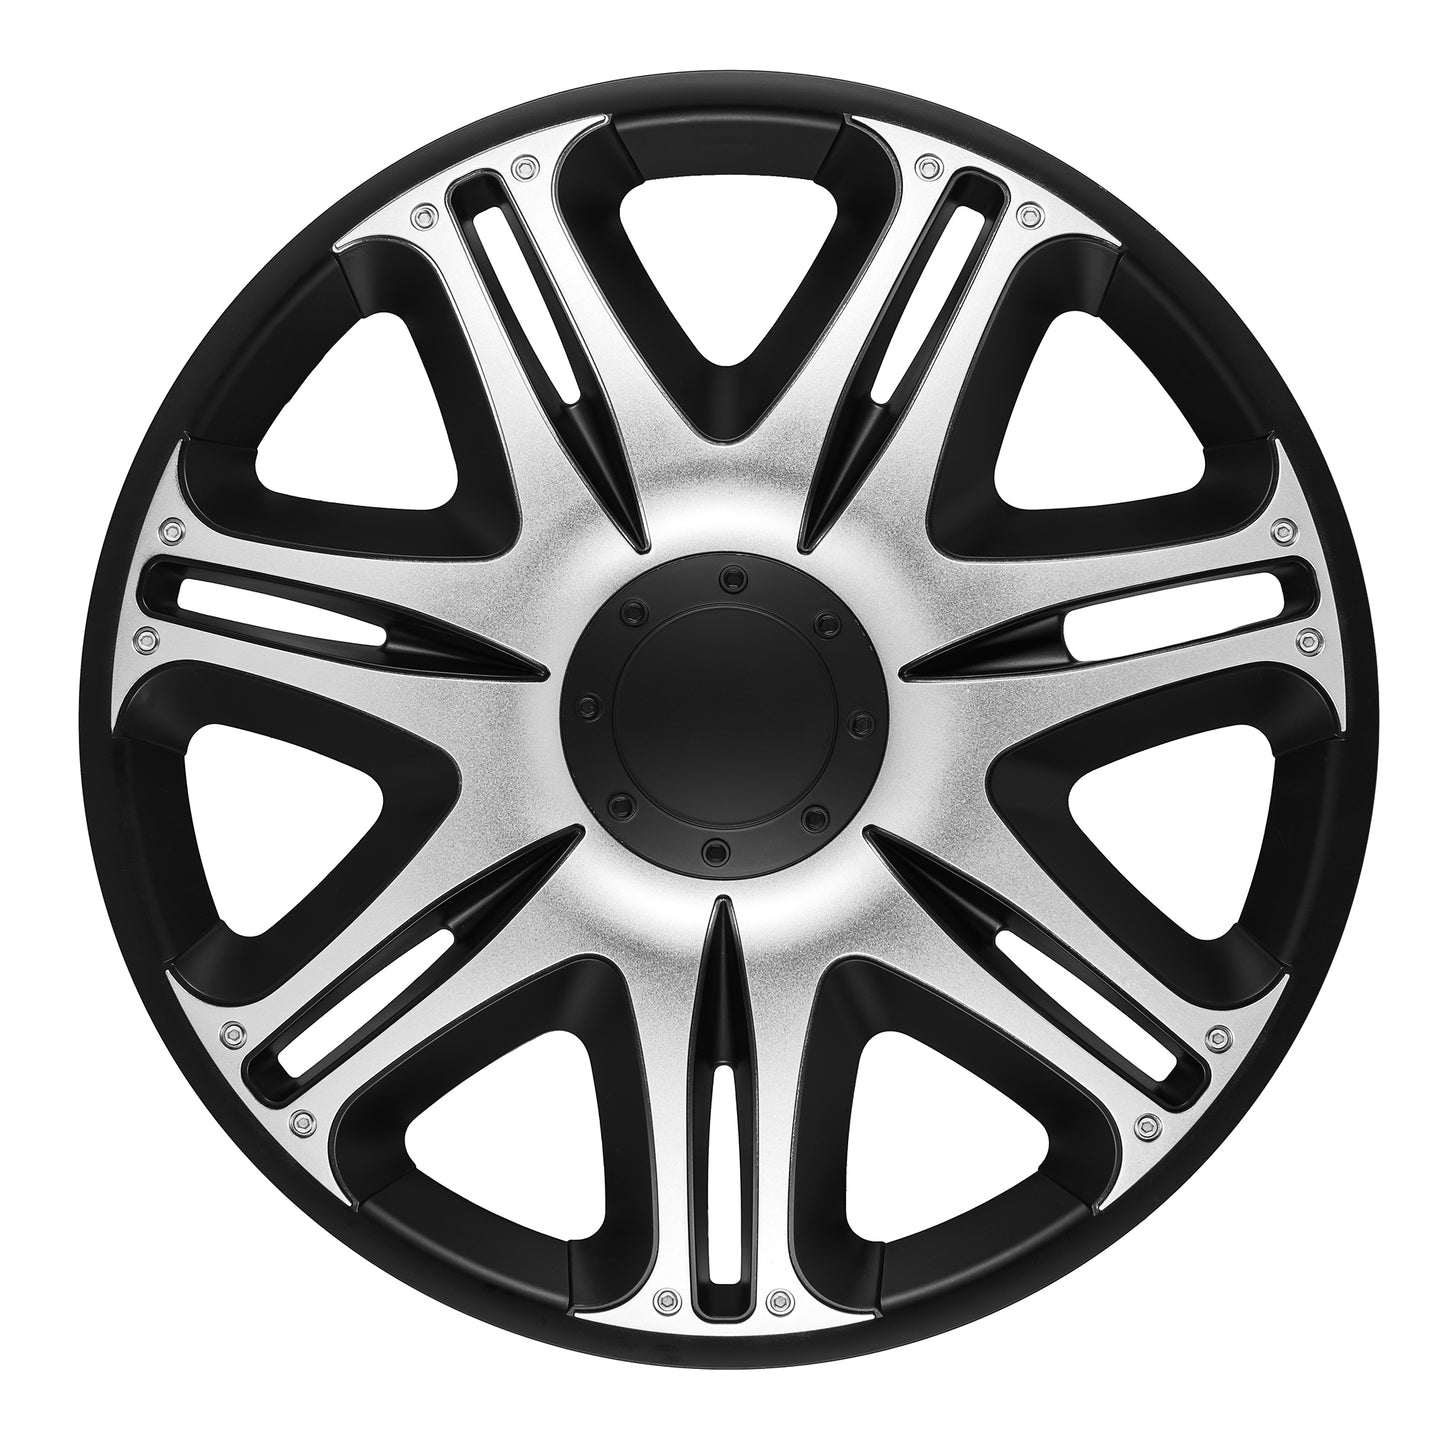 Velociti Wheel Cover Kit - Silver & Black (4 Pack)